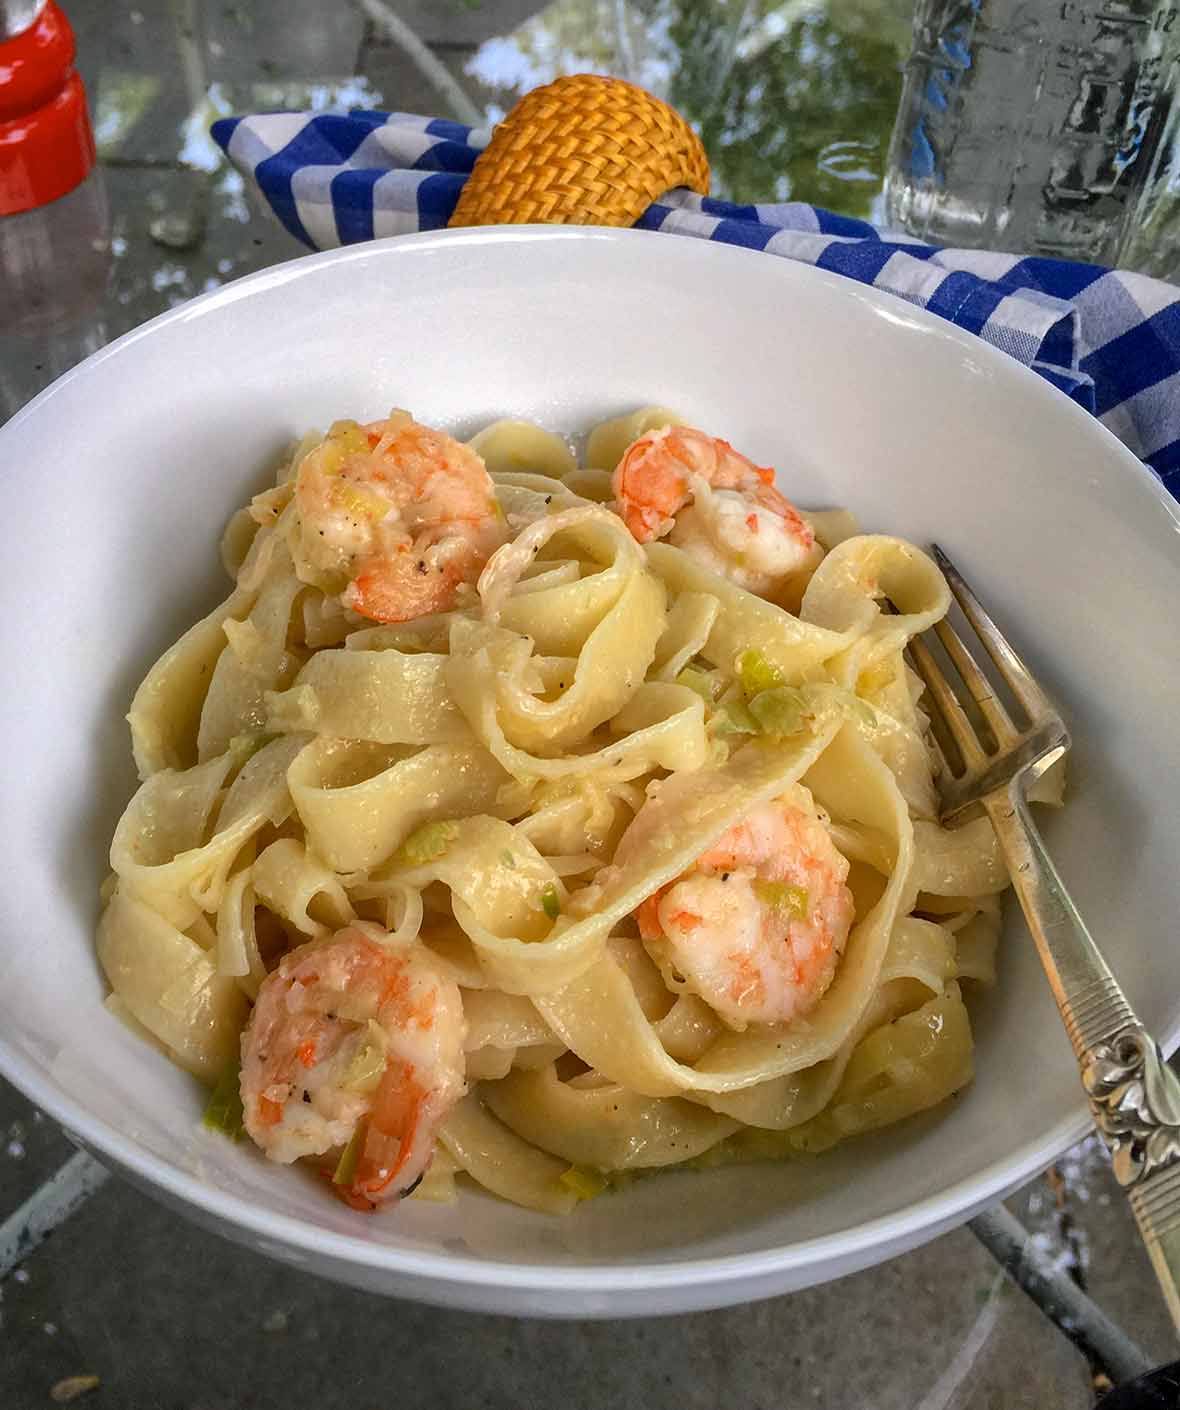 Shrimp and leek pasta